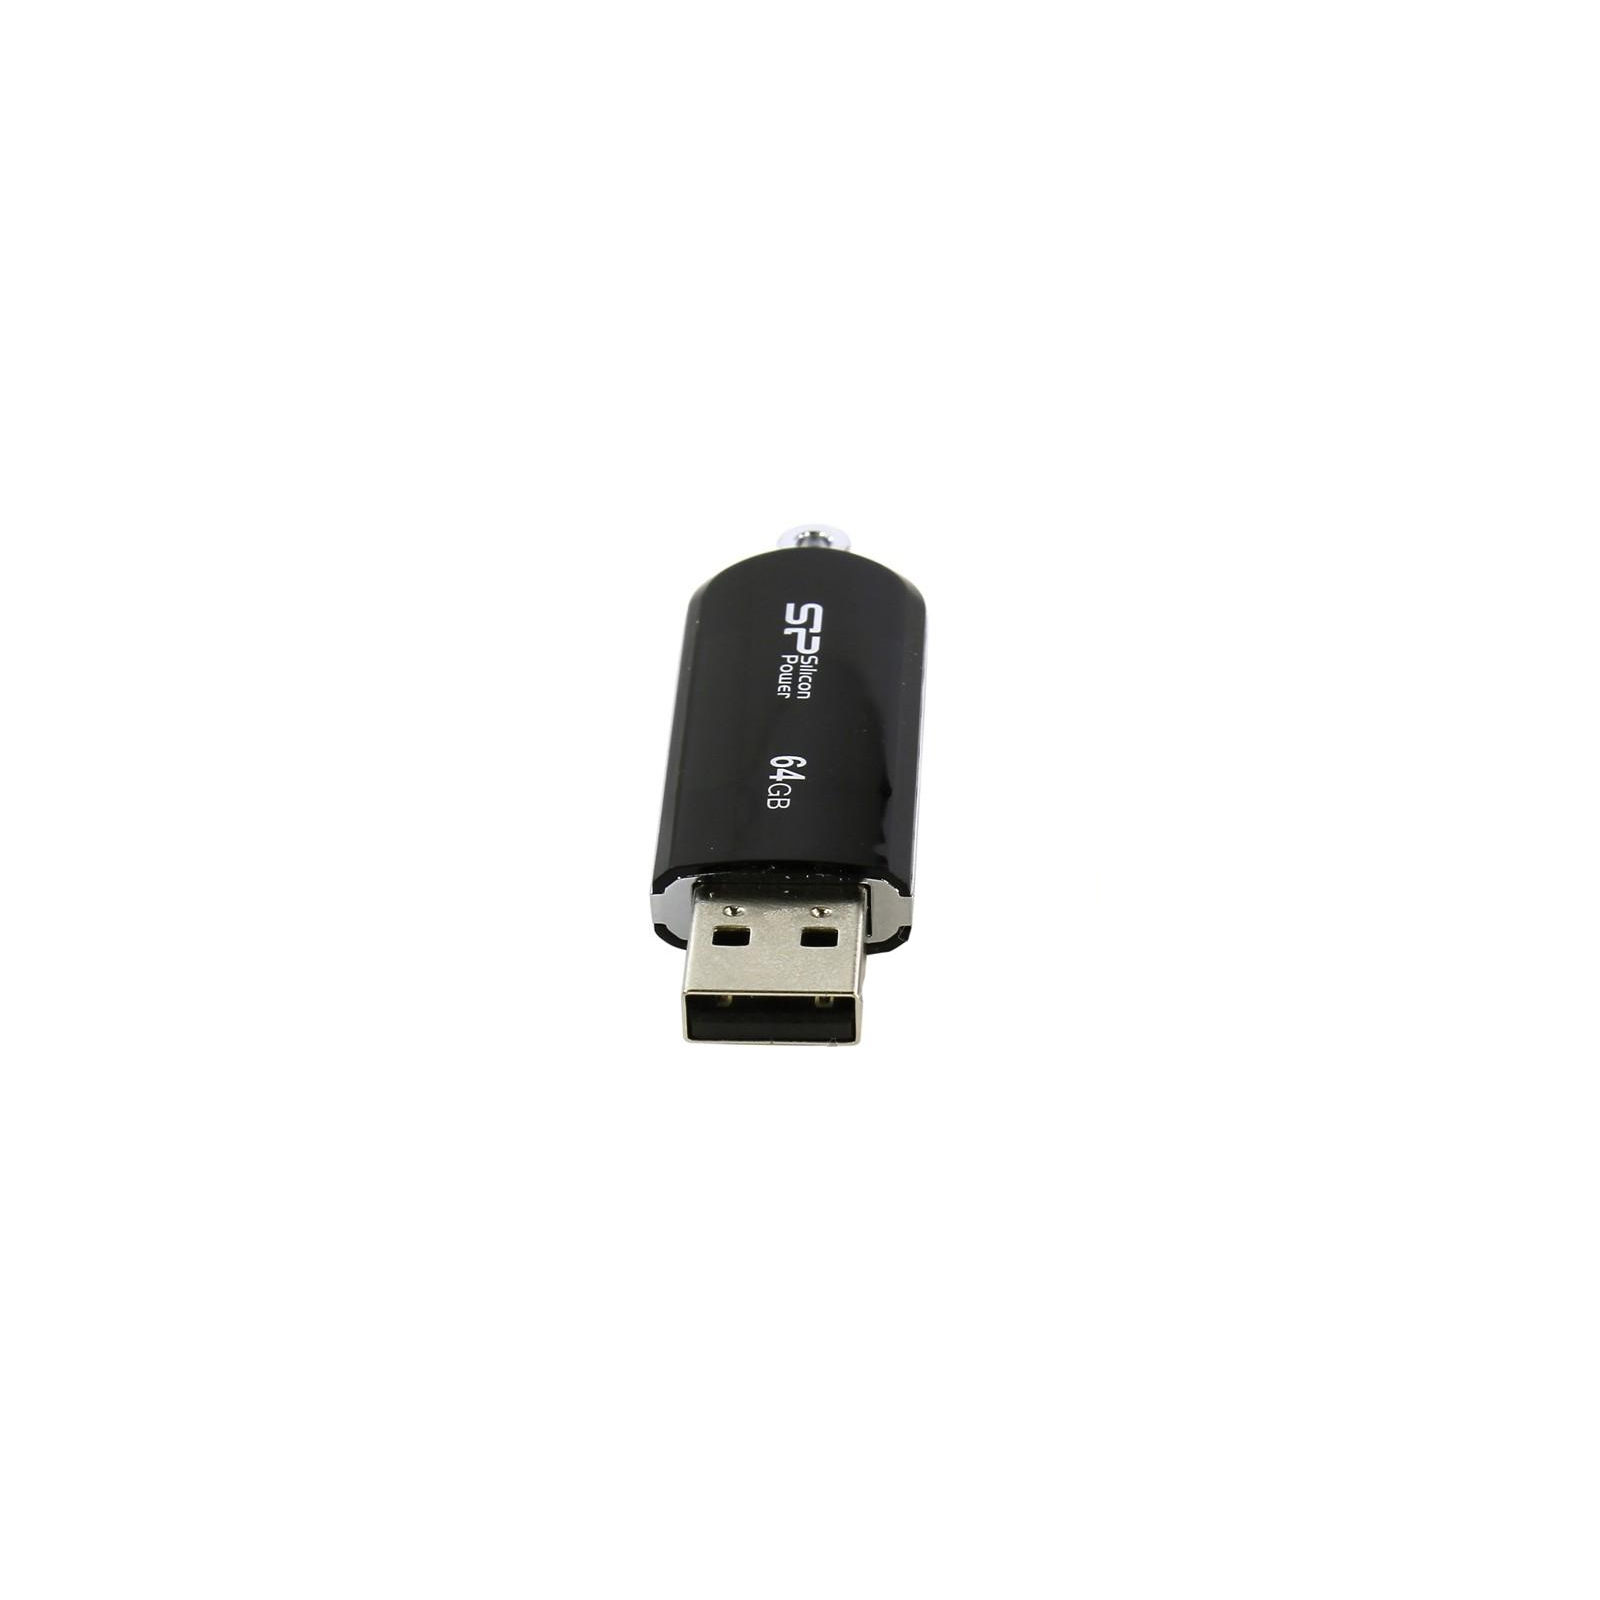 USB флеш накопитель Silicon Power 64GB Luxmini 322 USB 2.0 (SP064GBUF2322V1K) изображение 2